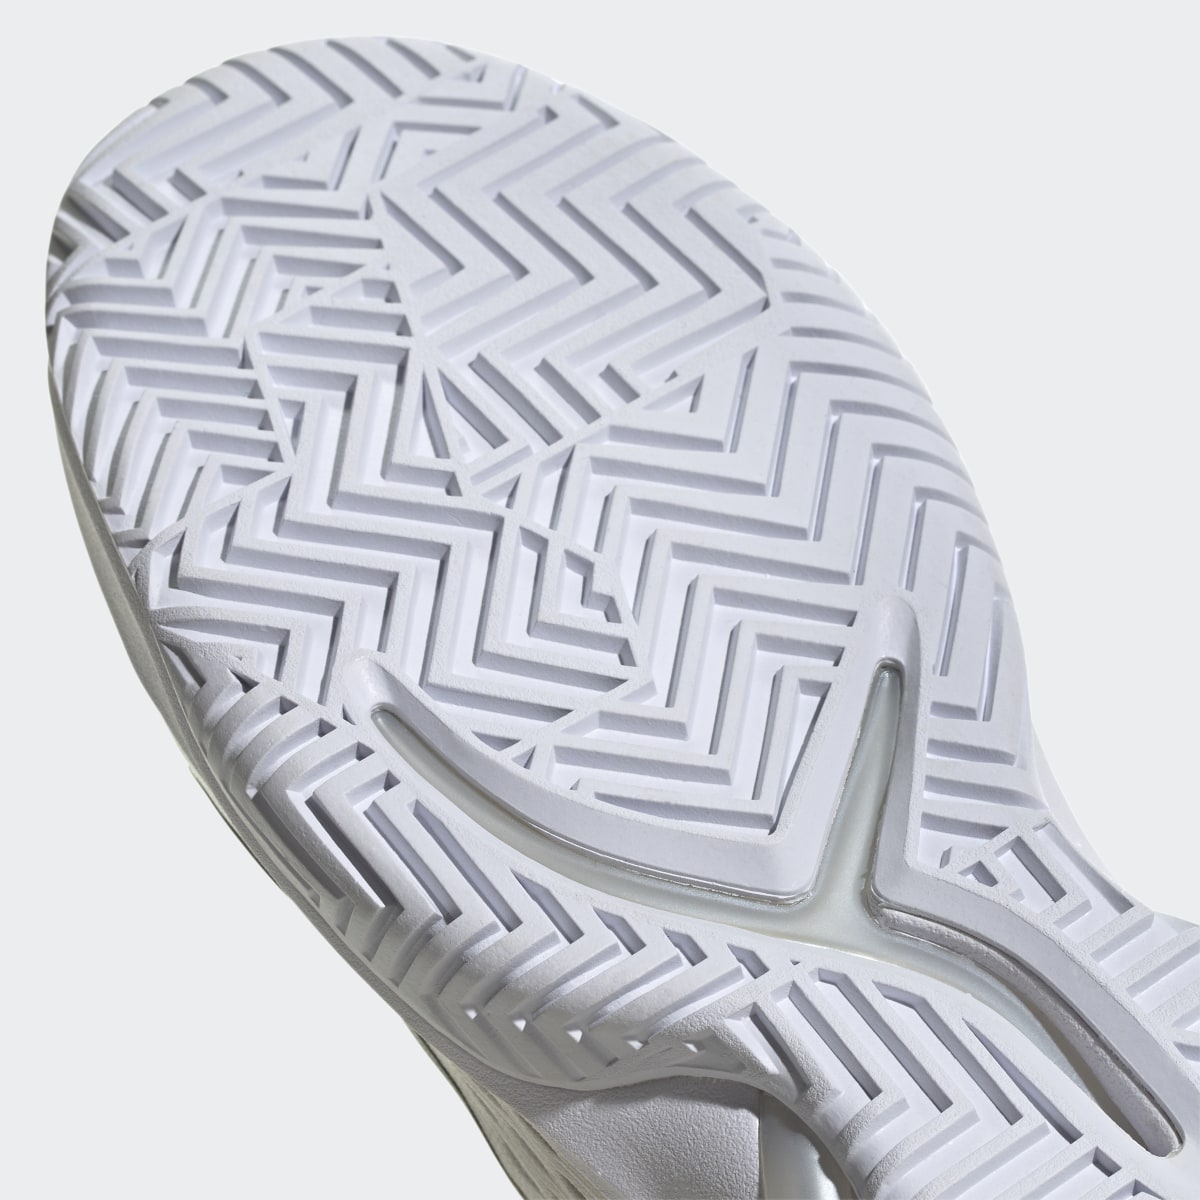 Adidas adizero Cybersonic Tenis Ayakkabısı. 4